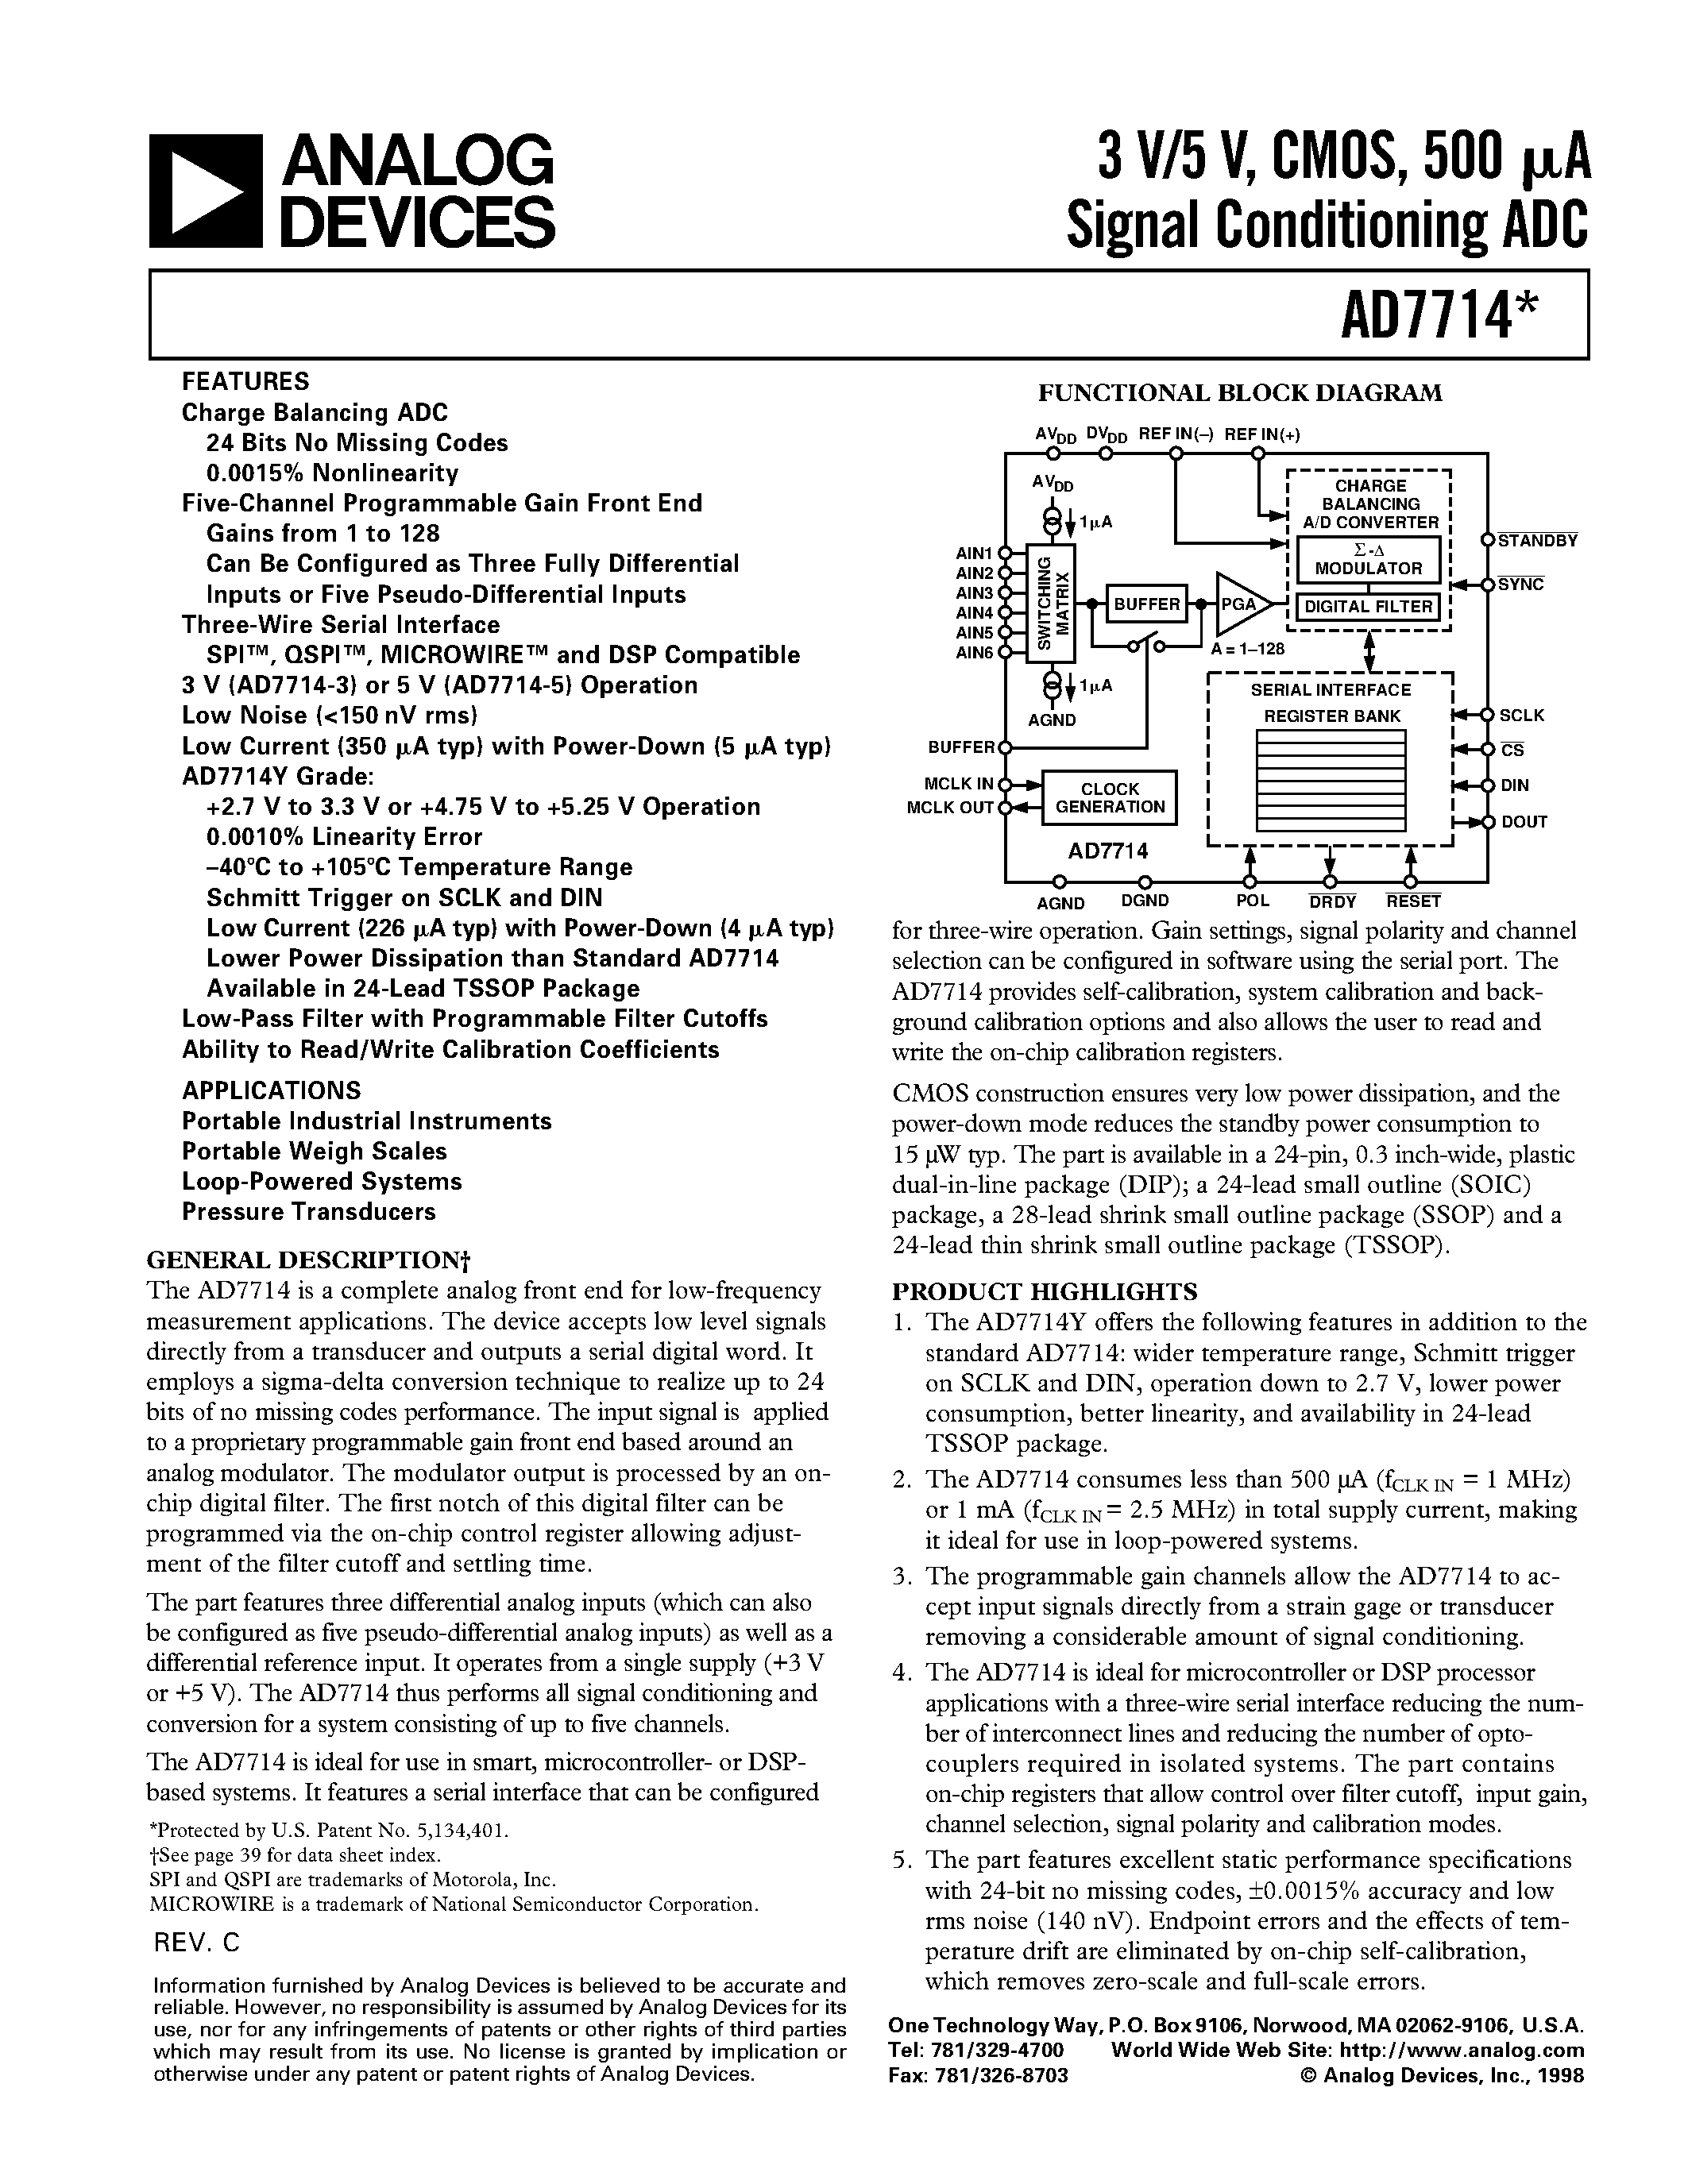 Datasheet AD7714AN-5 - 3 V/5 V/ CMOS/ 500 uA Signal Conditioning ADC page 1